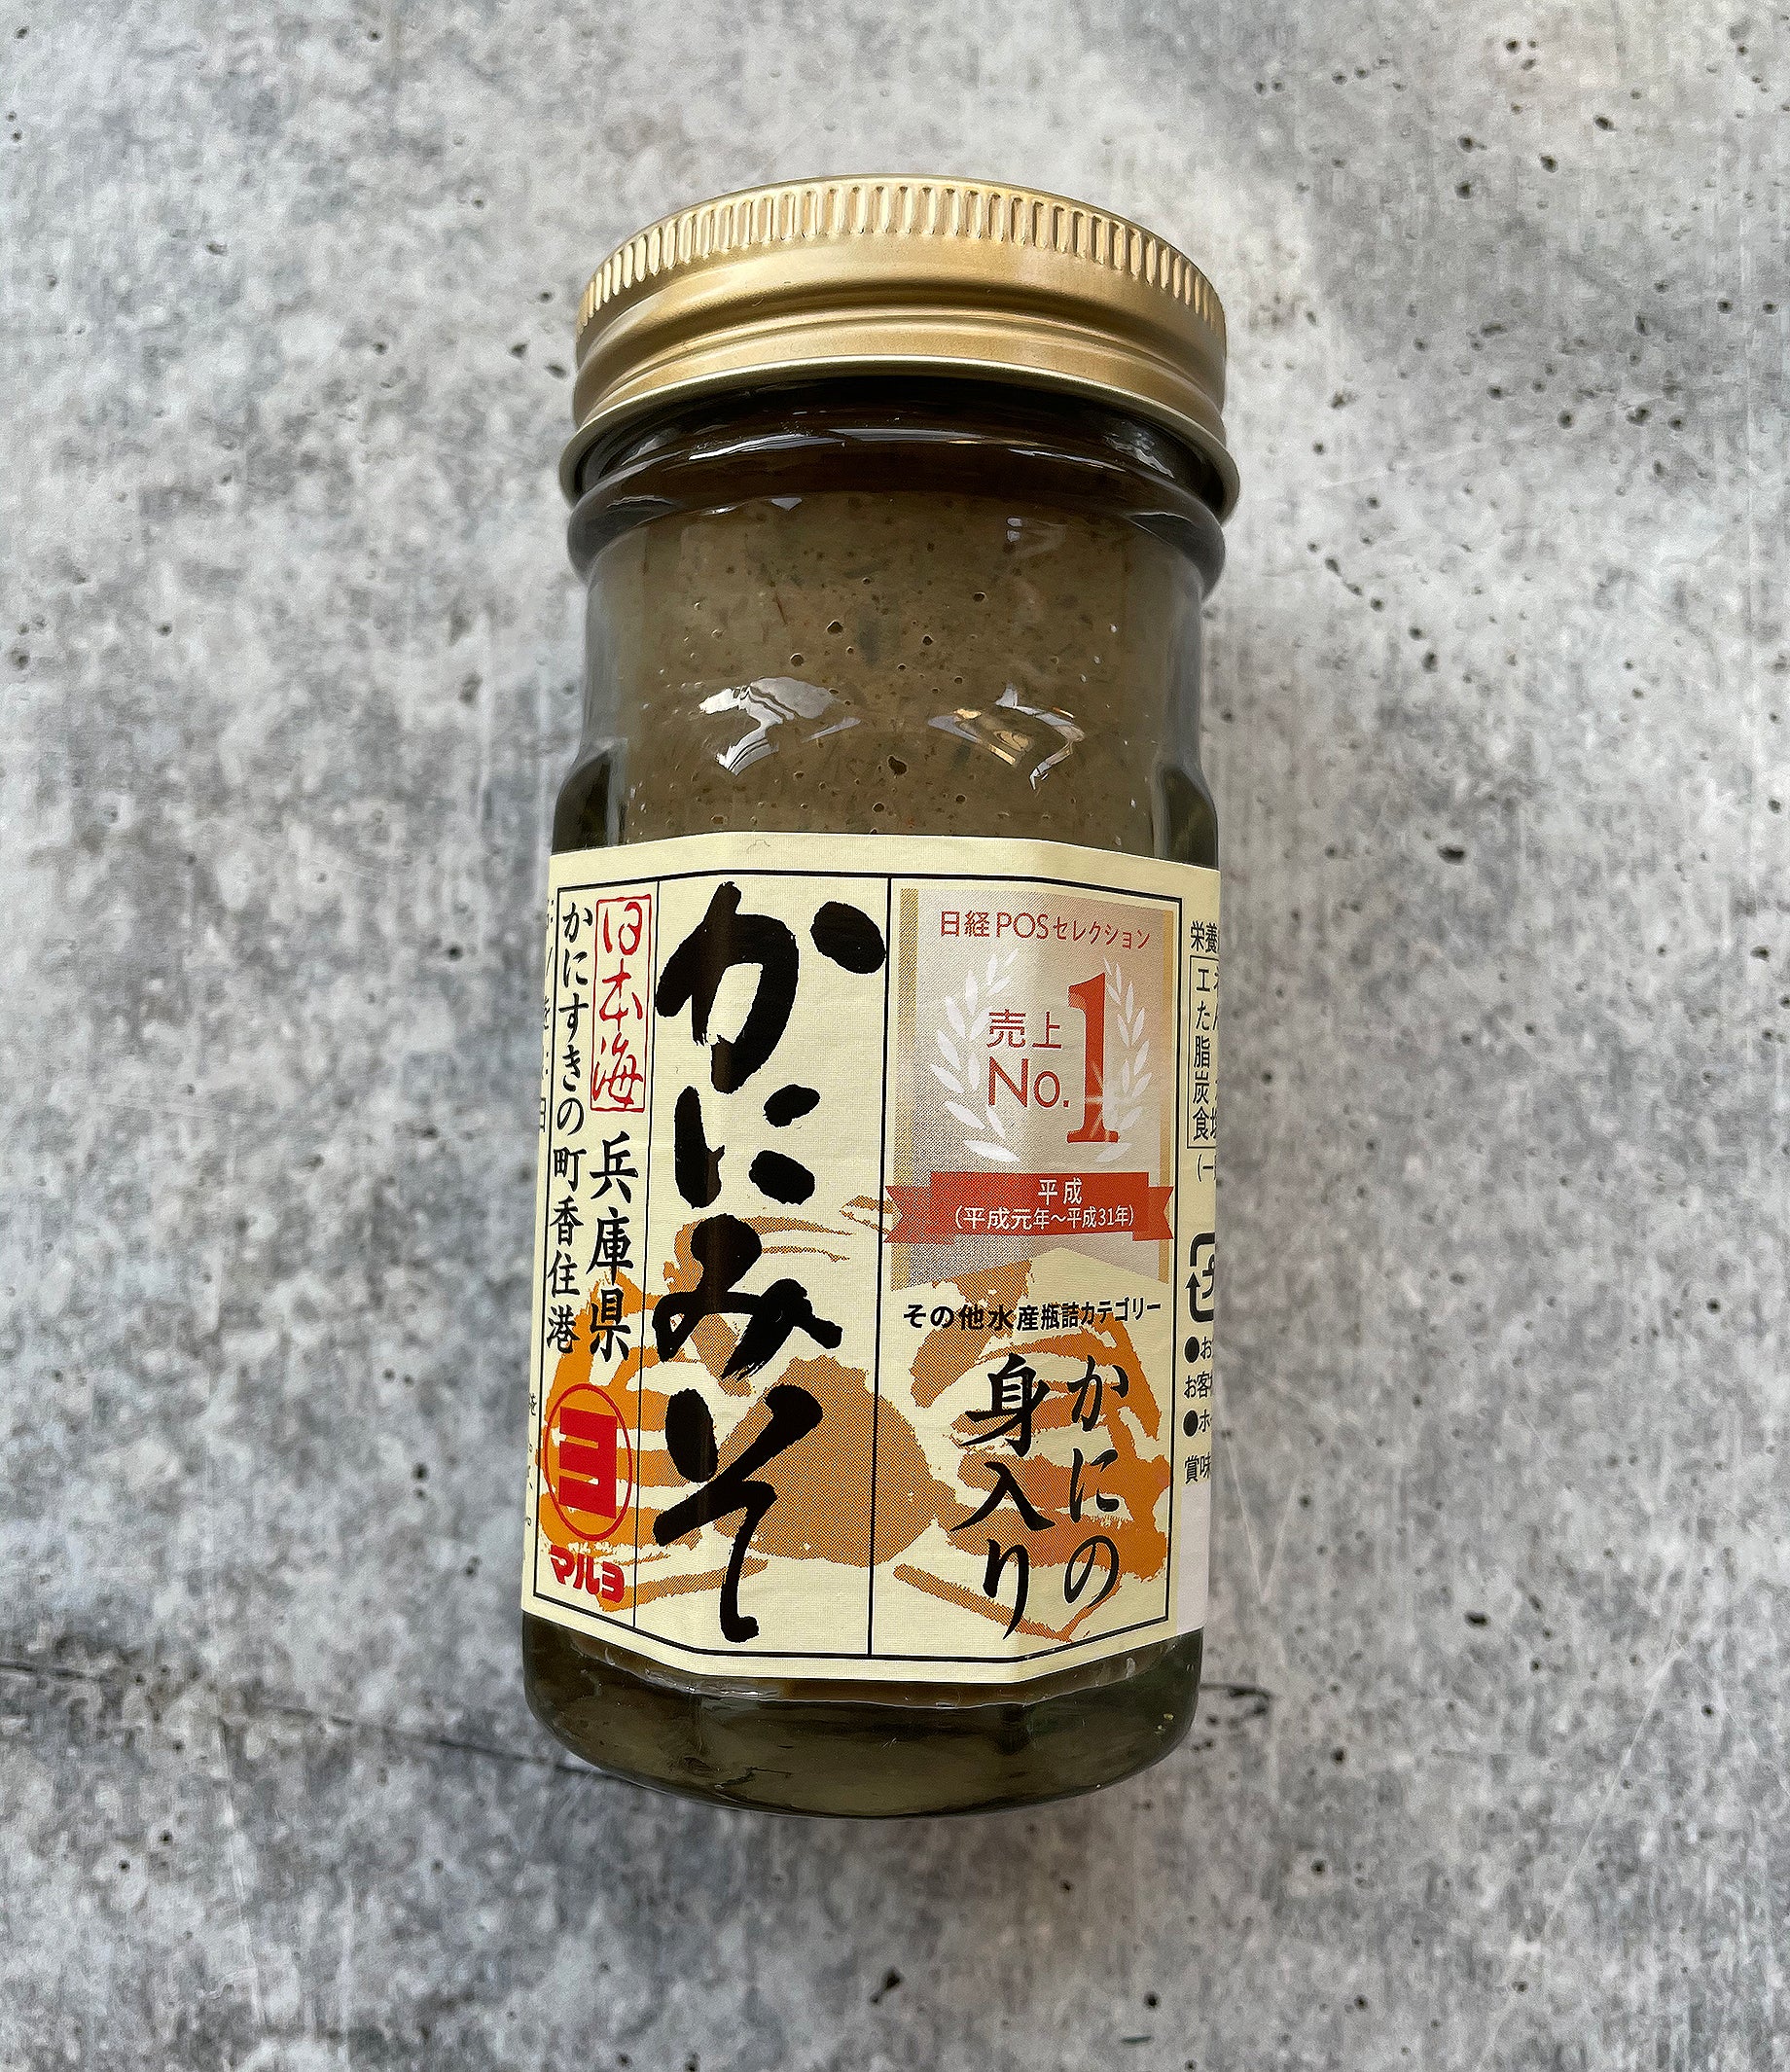 Japanese Seasoning Gift Set - Tastes of Japan - Artisanal Spice Blends Six  Pack